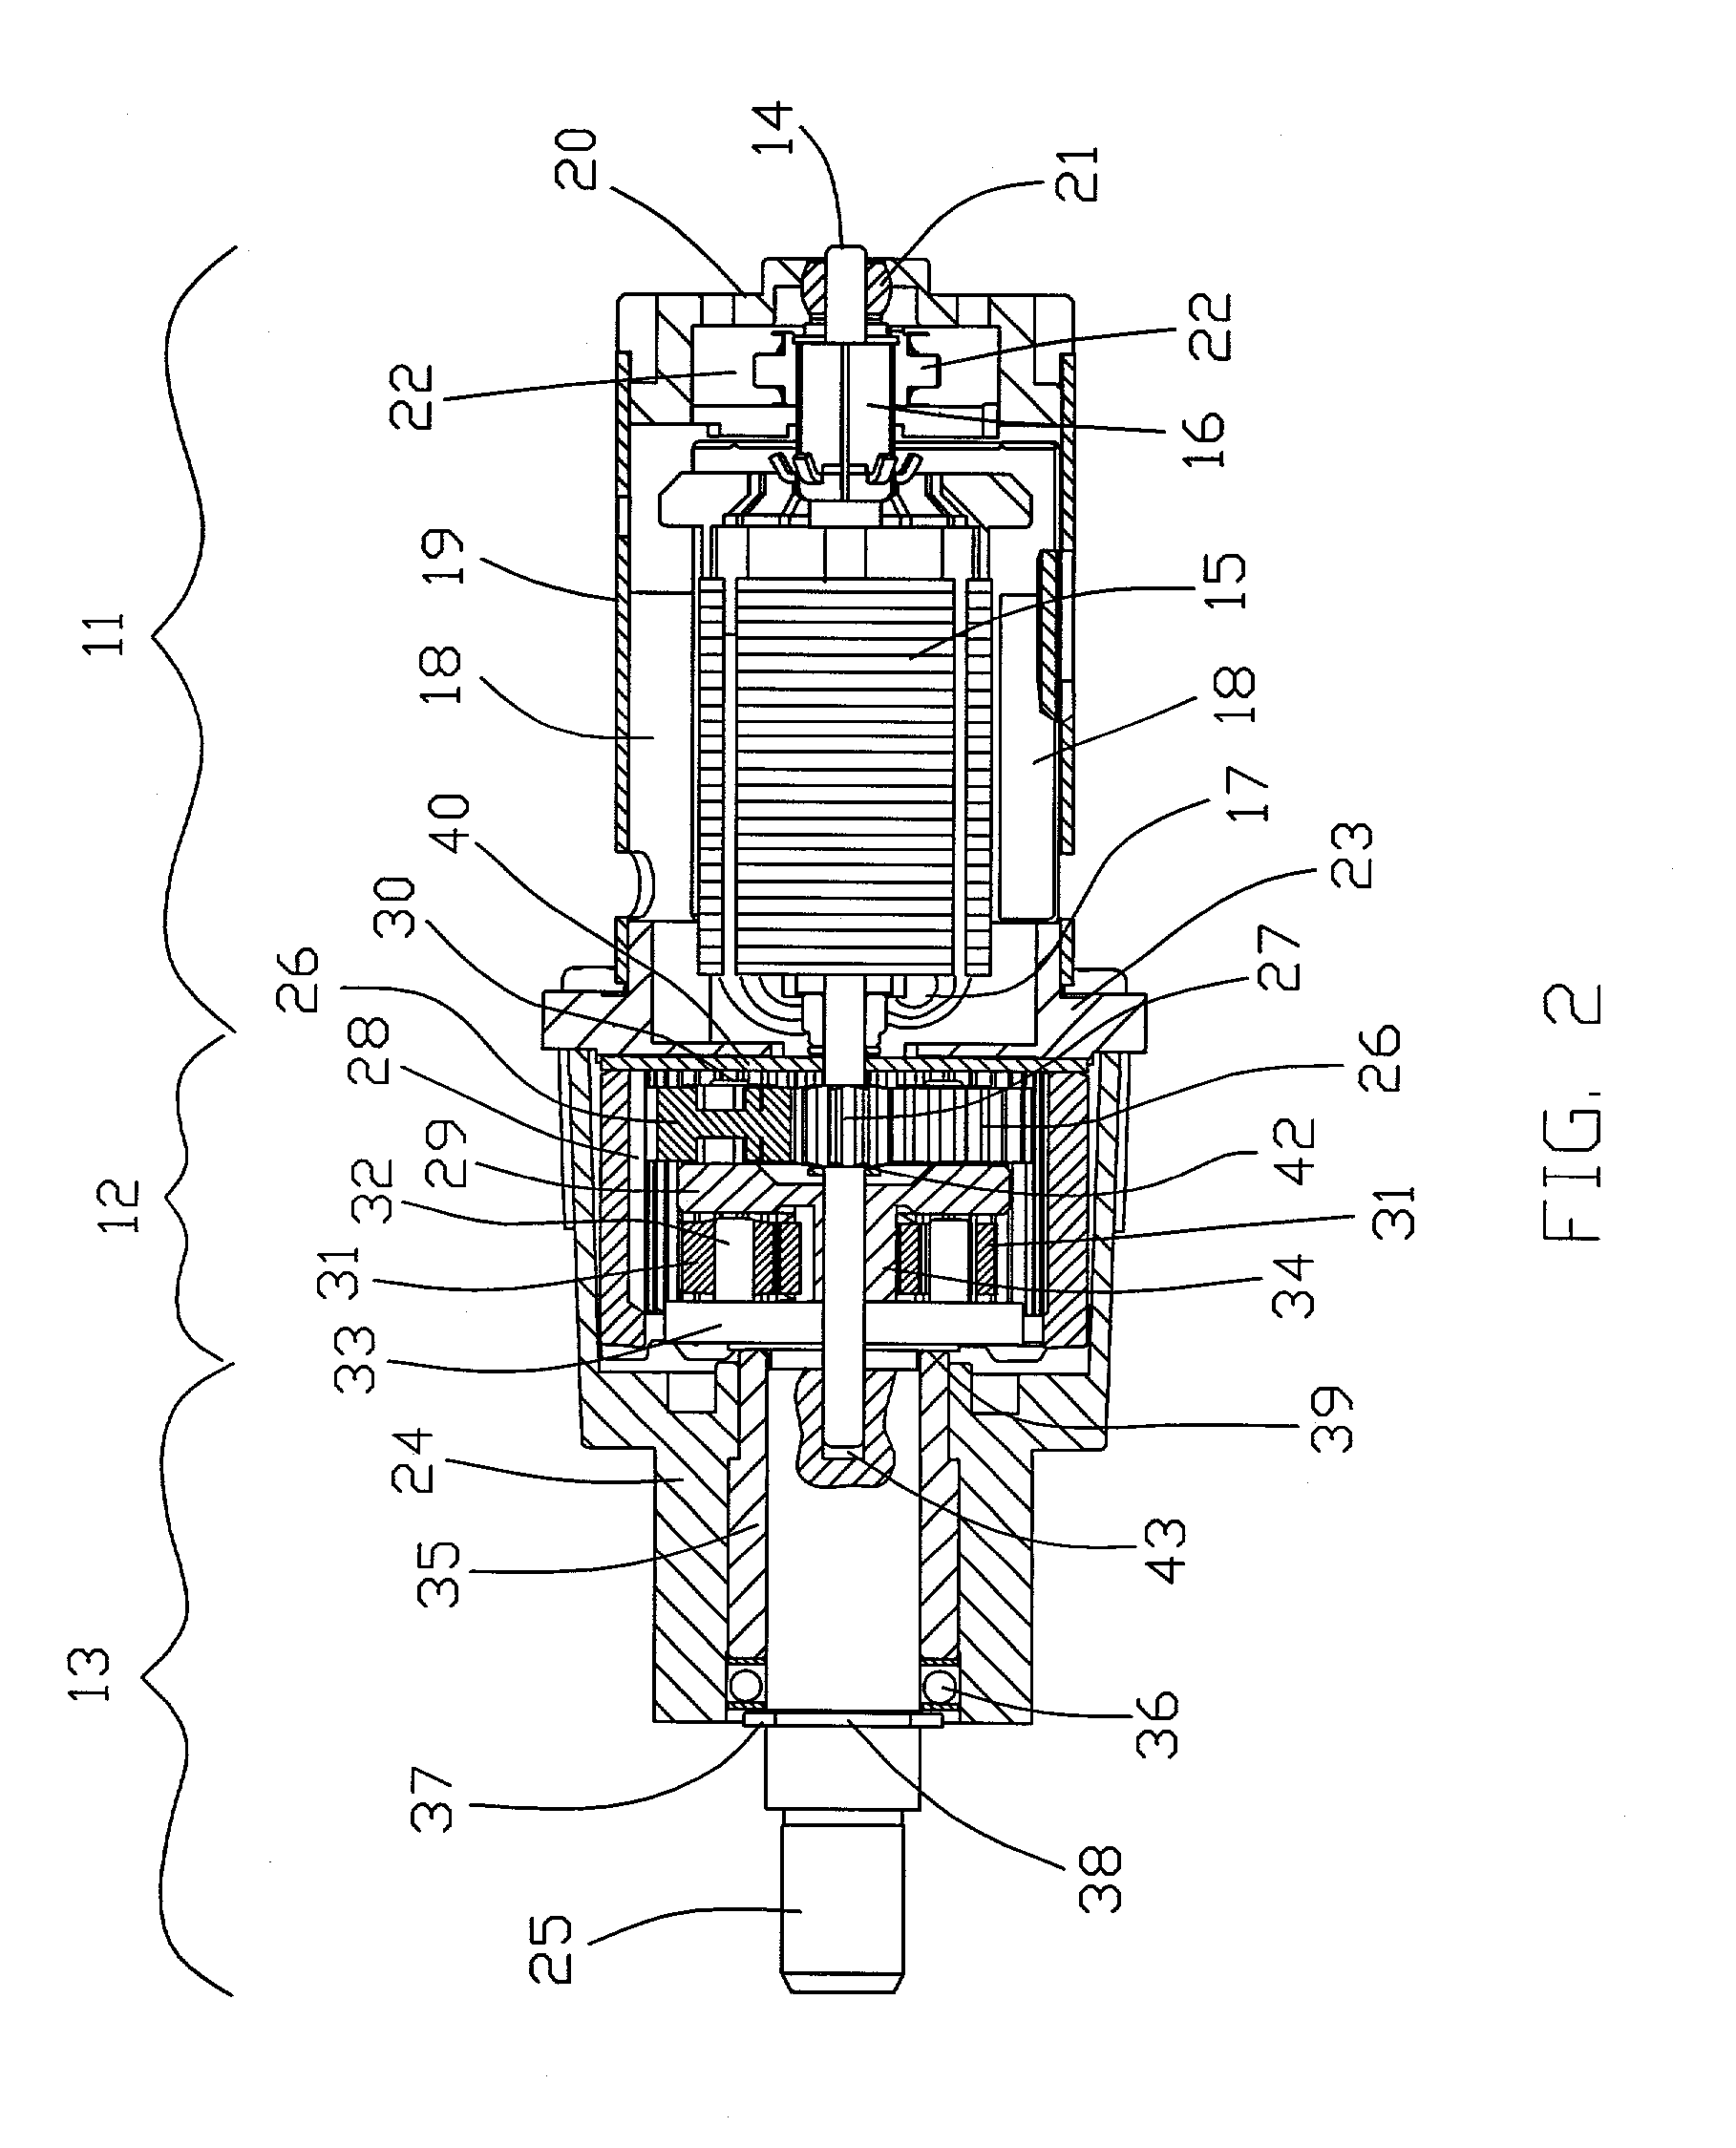 Gear motor for power tool